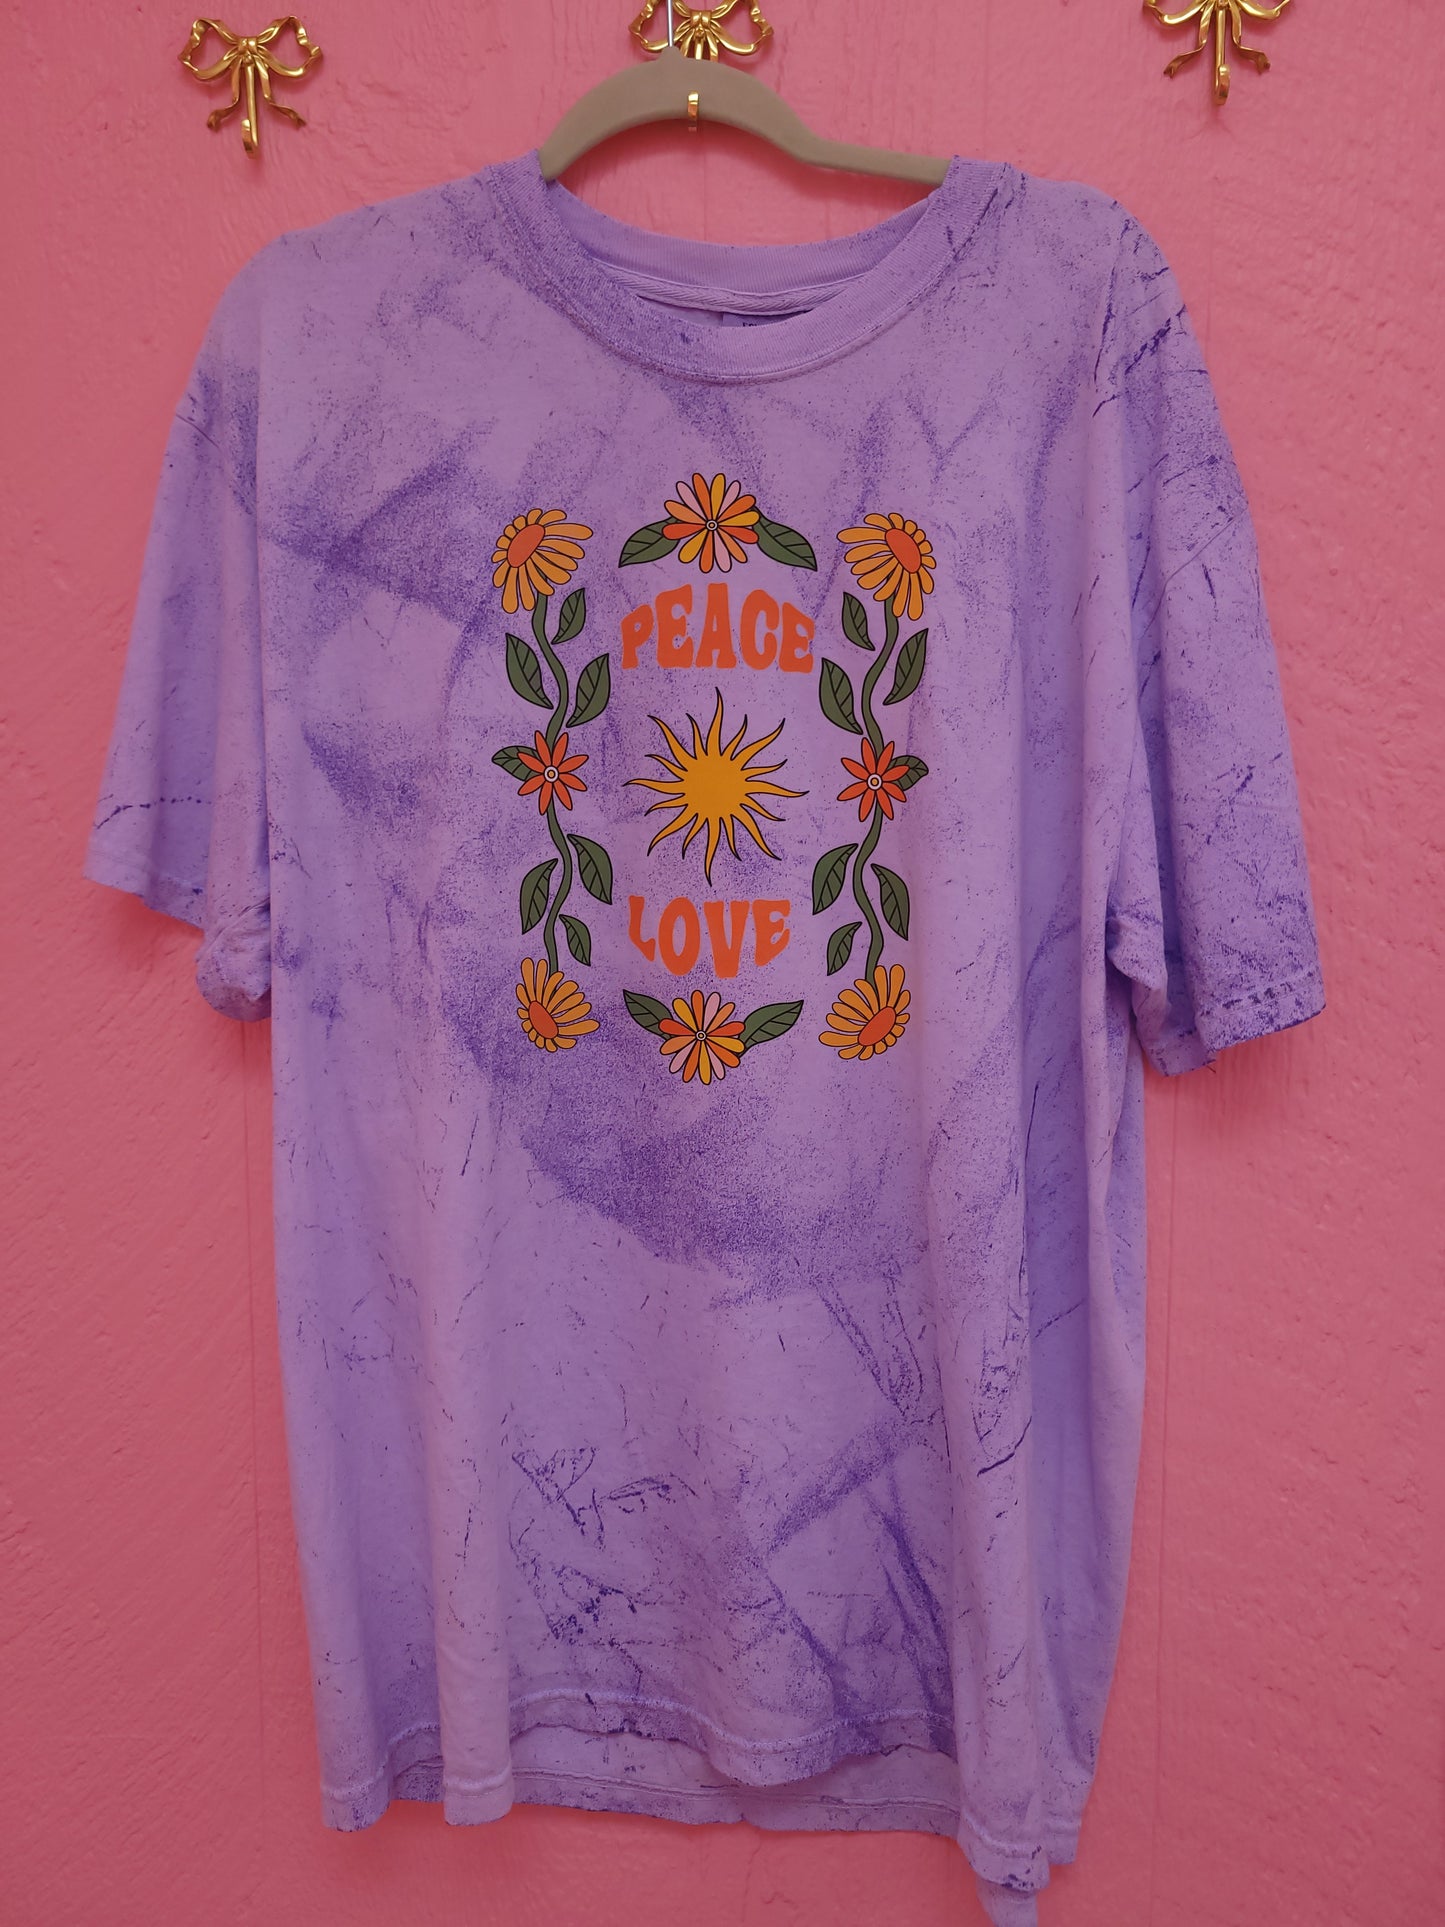 "Peace, Love" Shirt